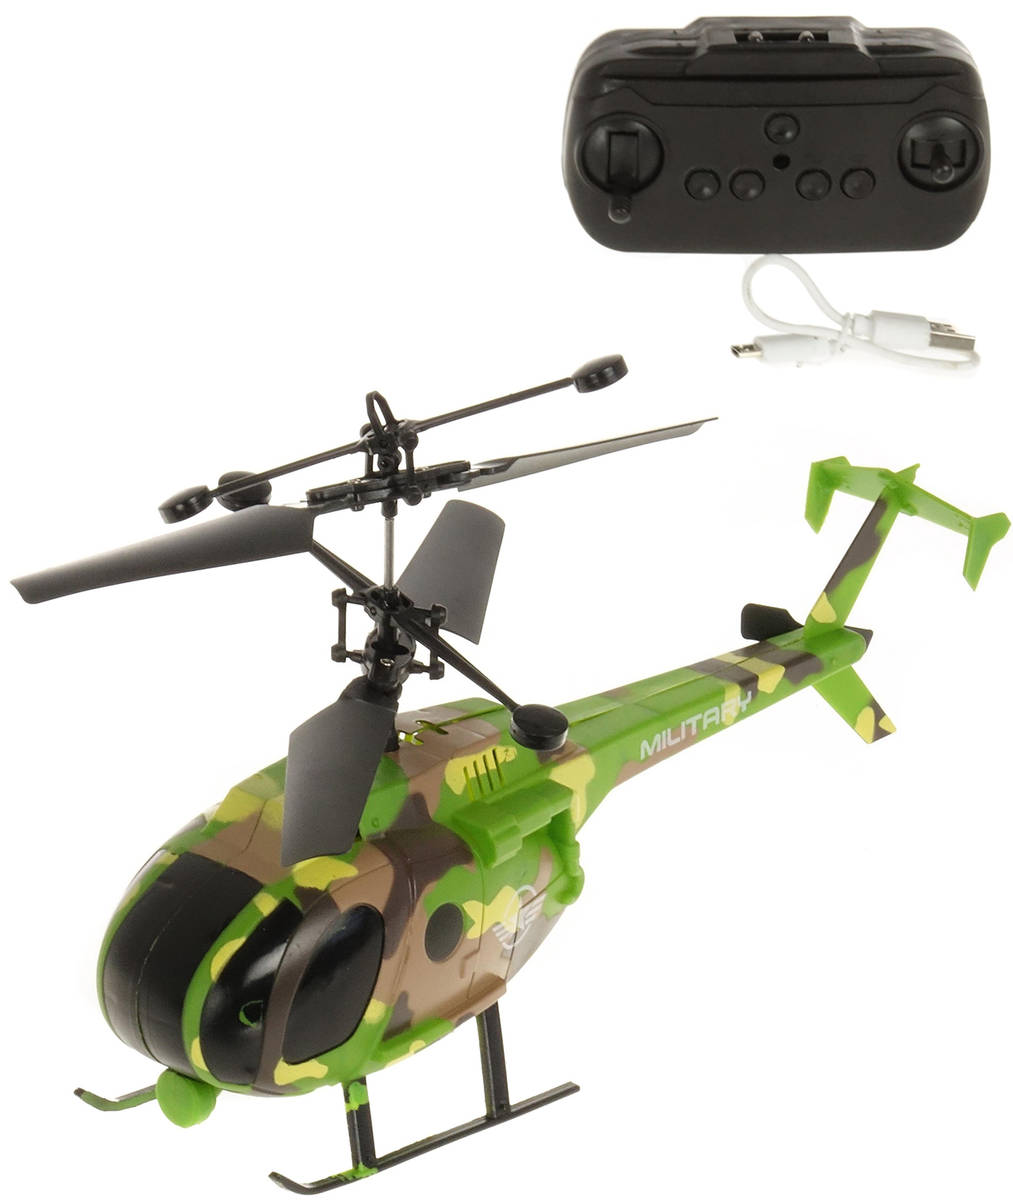 RC Vrtulník army vojenský 20cm na vysílačku na baterie USB